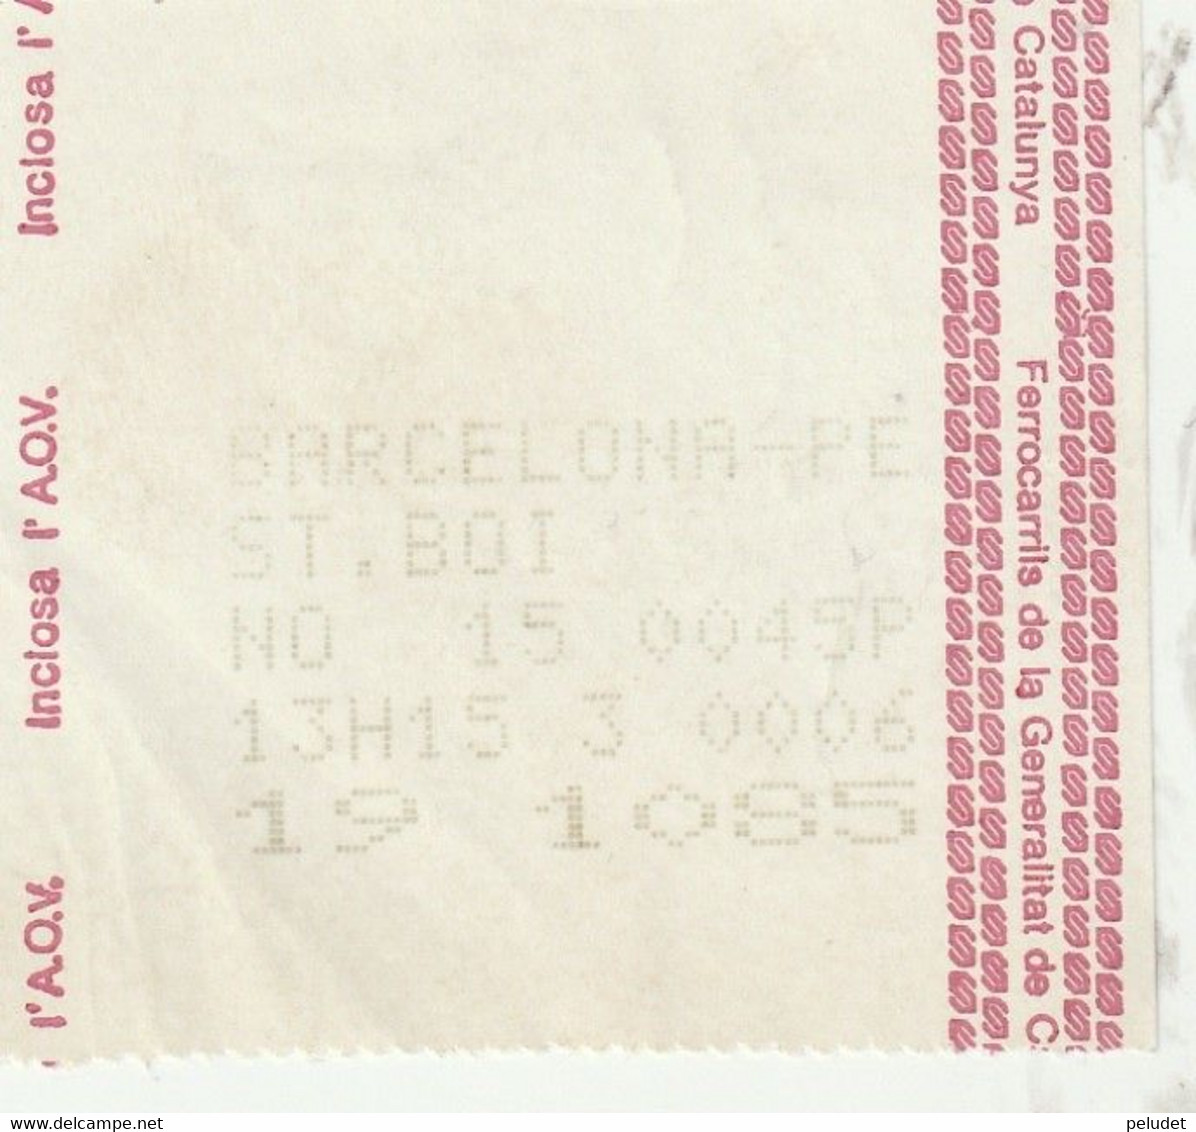 FGC - BARCELONA - ST BOI - 1985 - Europe